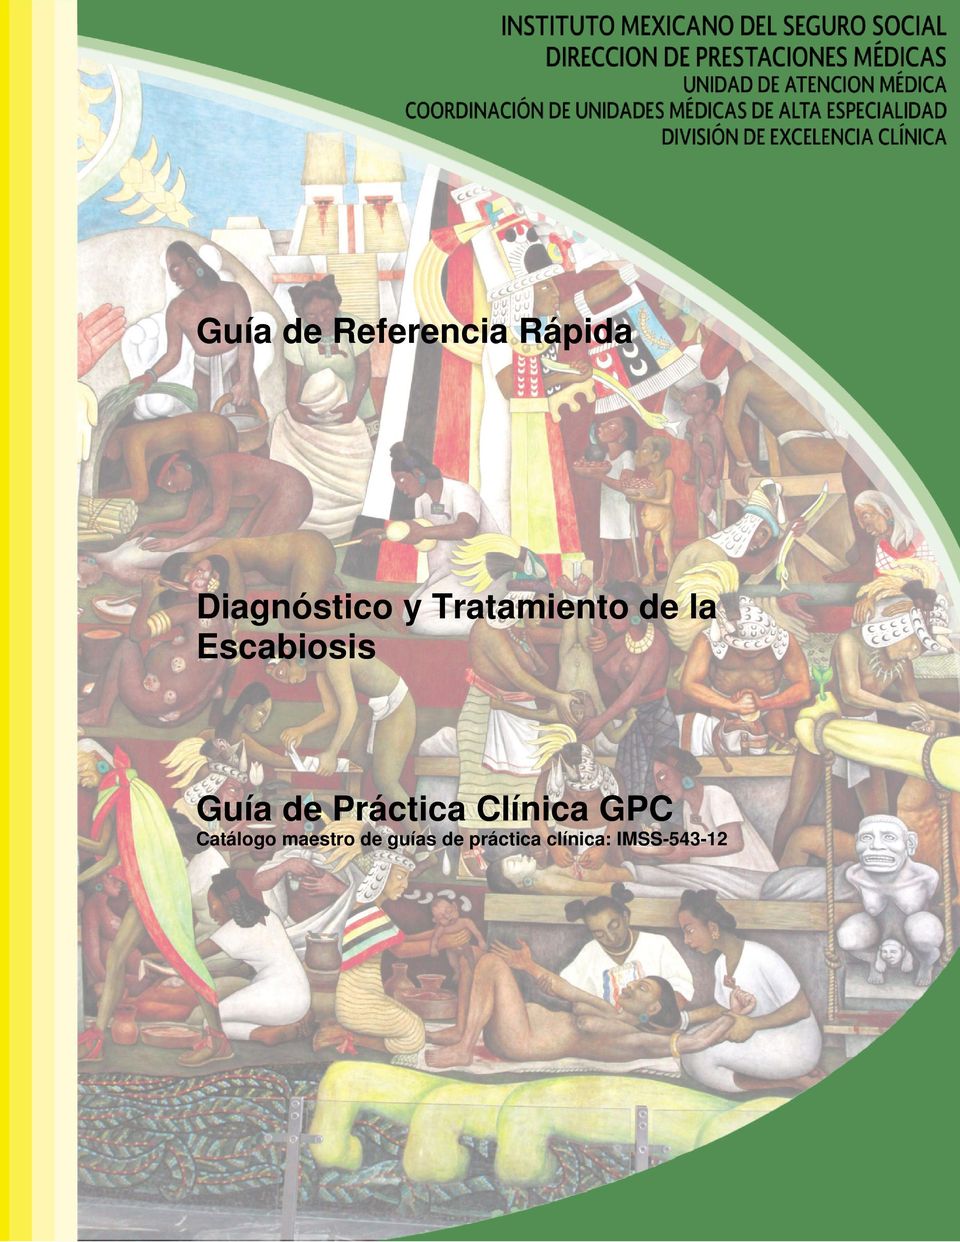 Práctica Clínica GPC Catálogo maestro